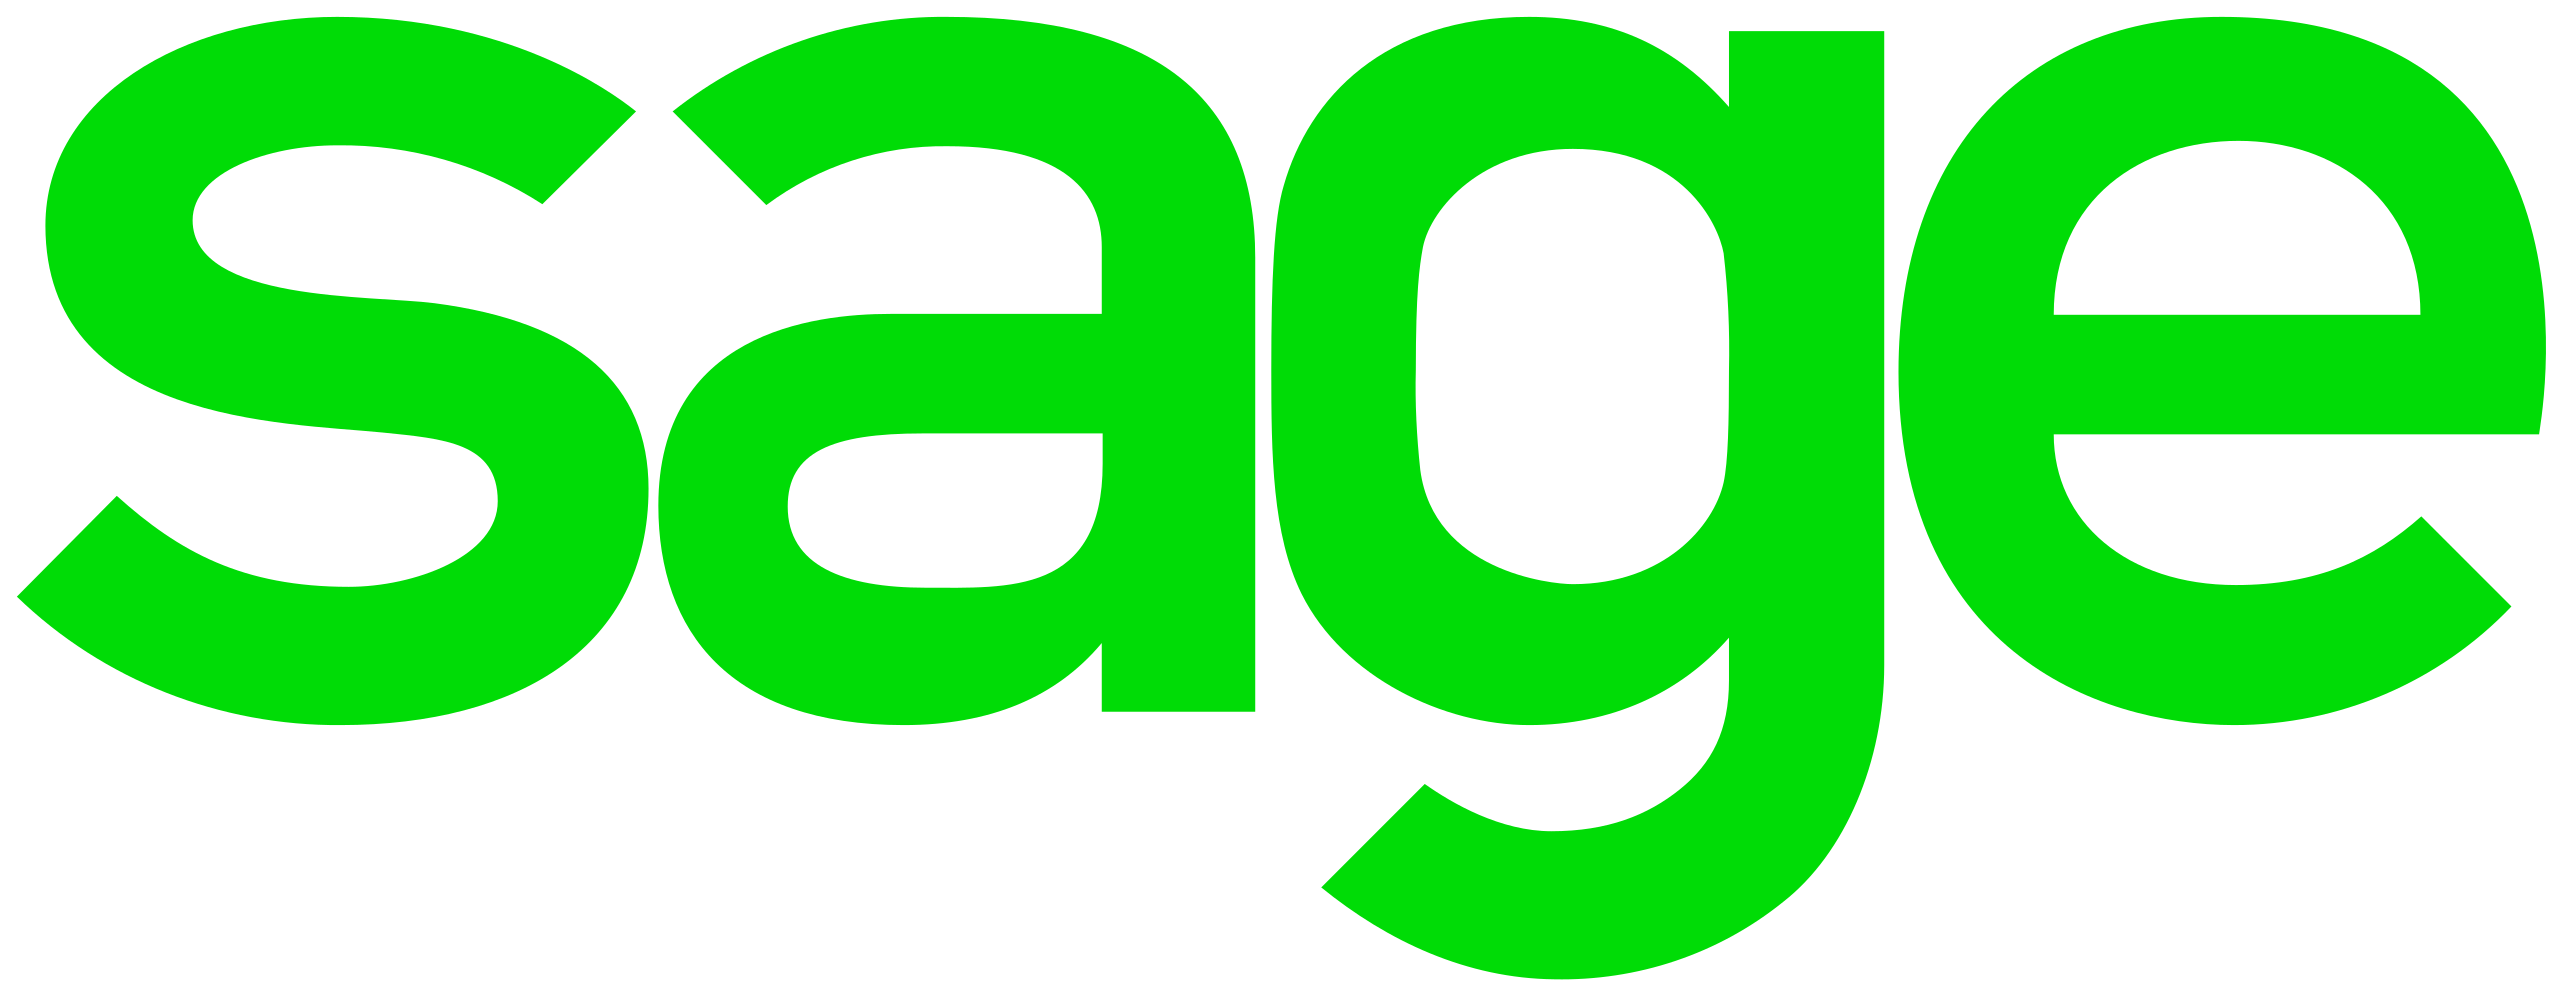 support logo